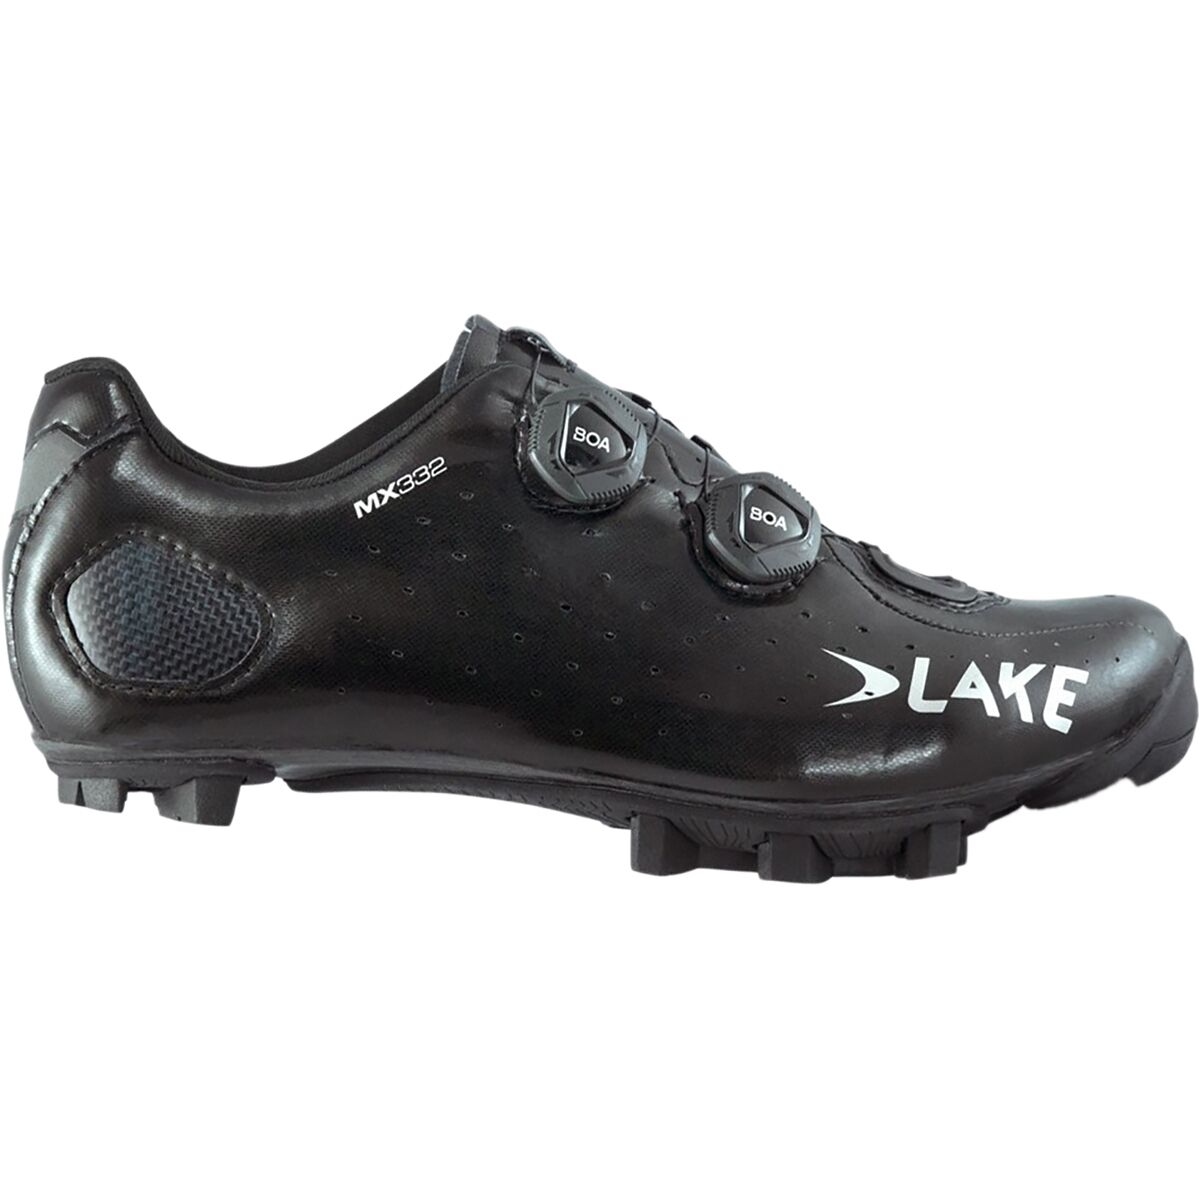 Lake MX332 Clarino Mountain Bike Shoe - Men's